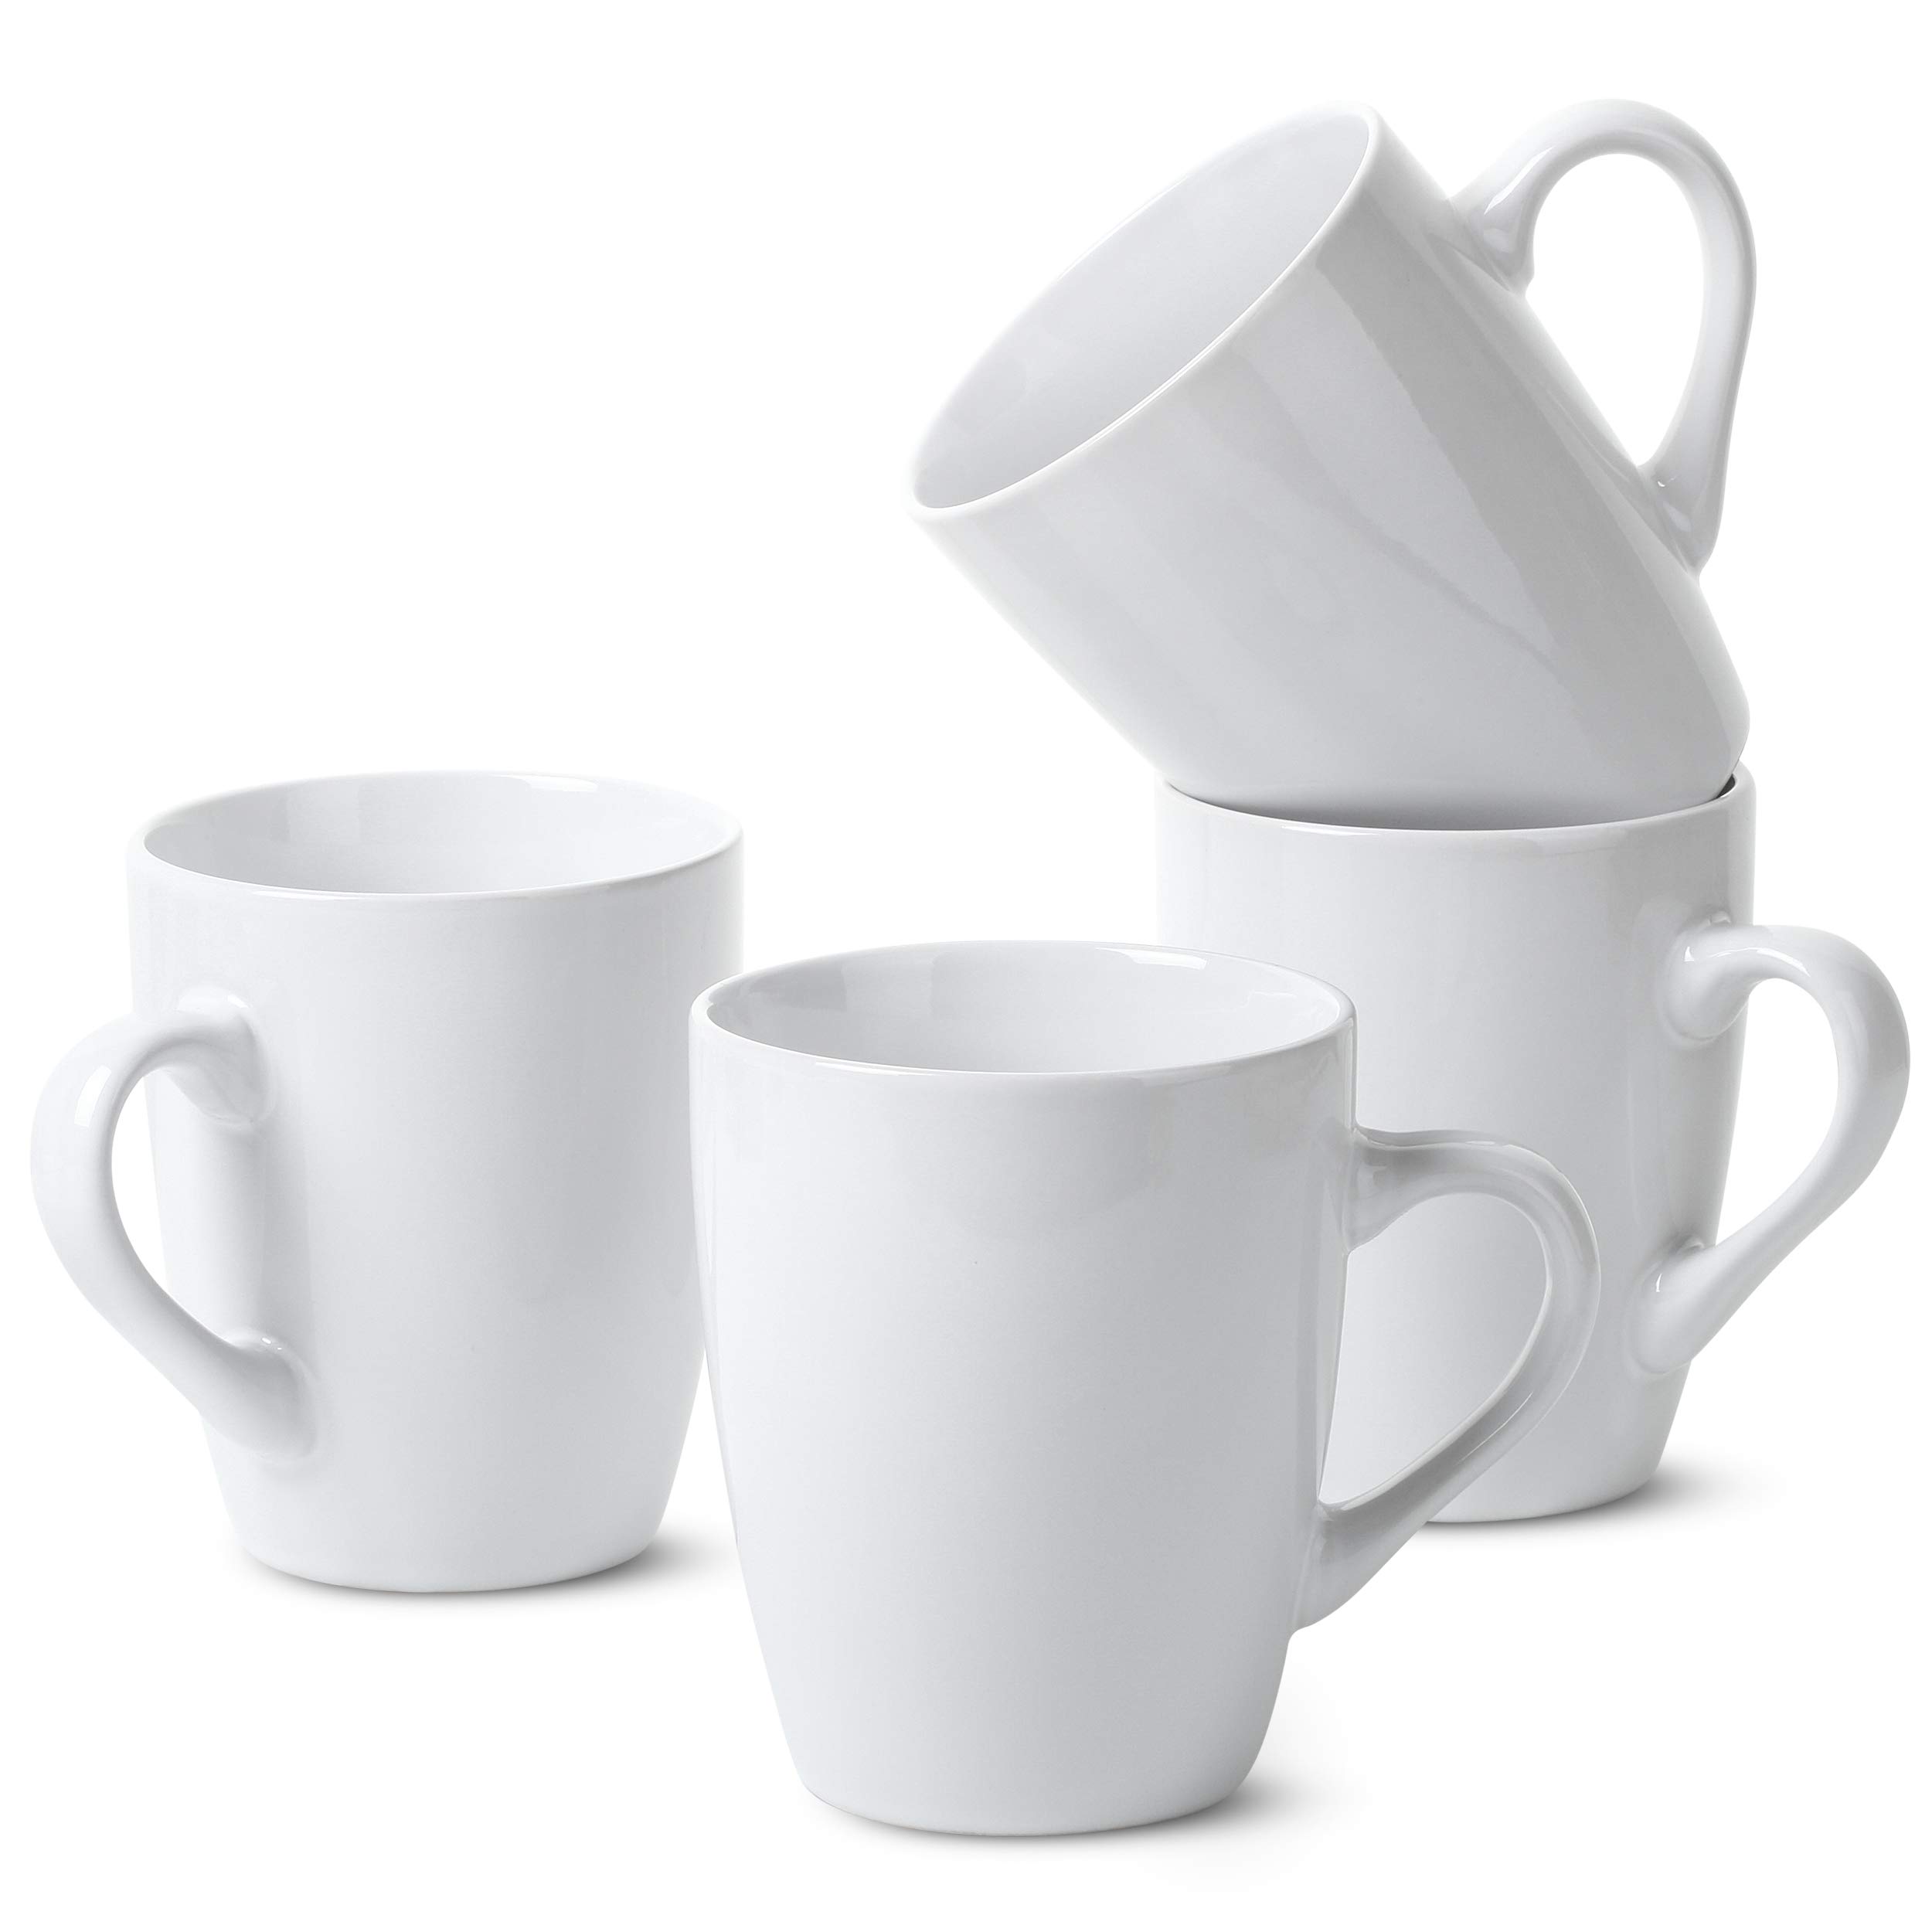 BTaT- White Coffee Mugs, Set of 4